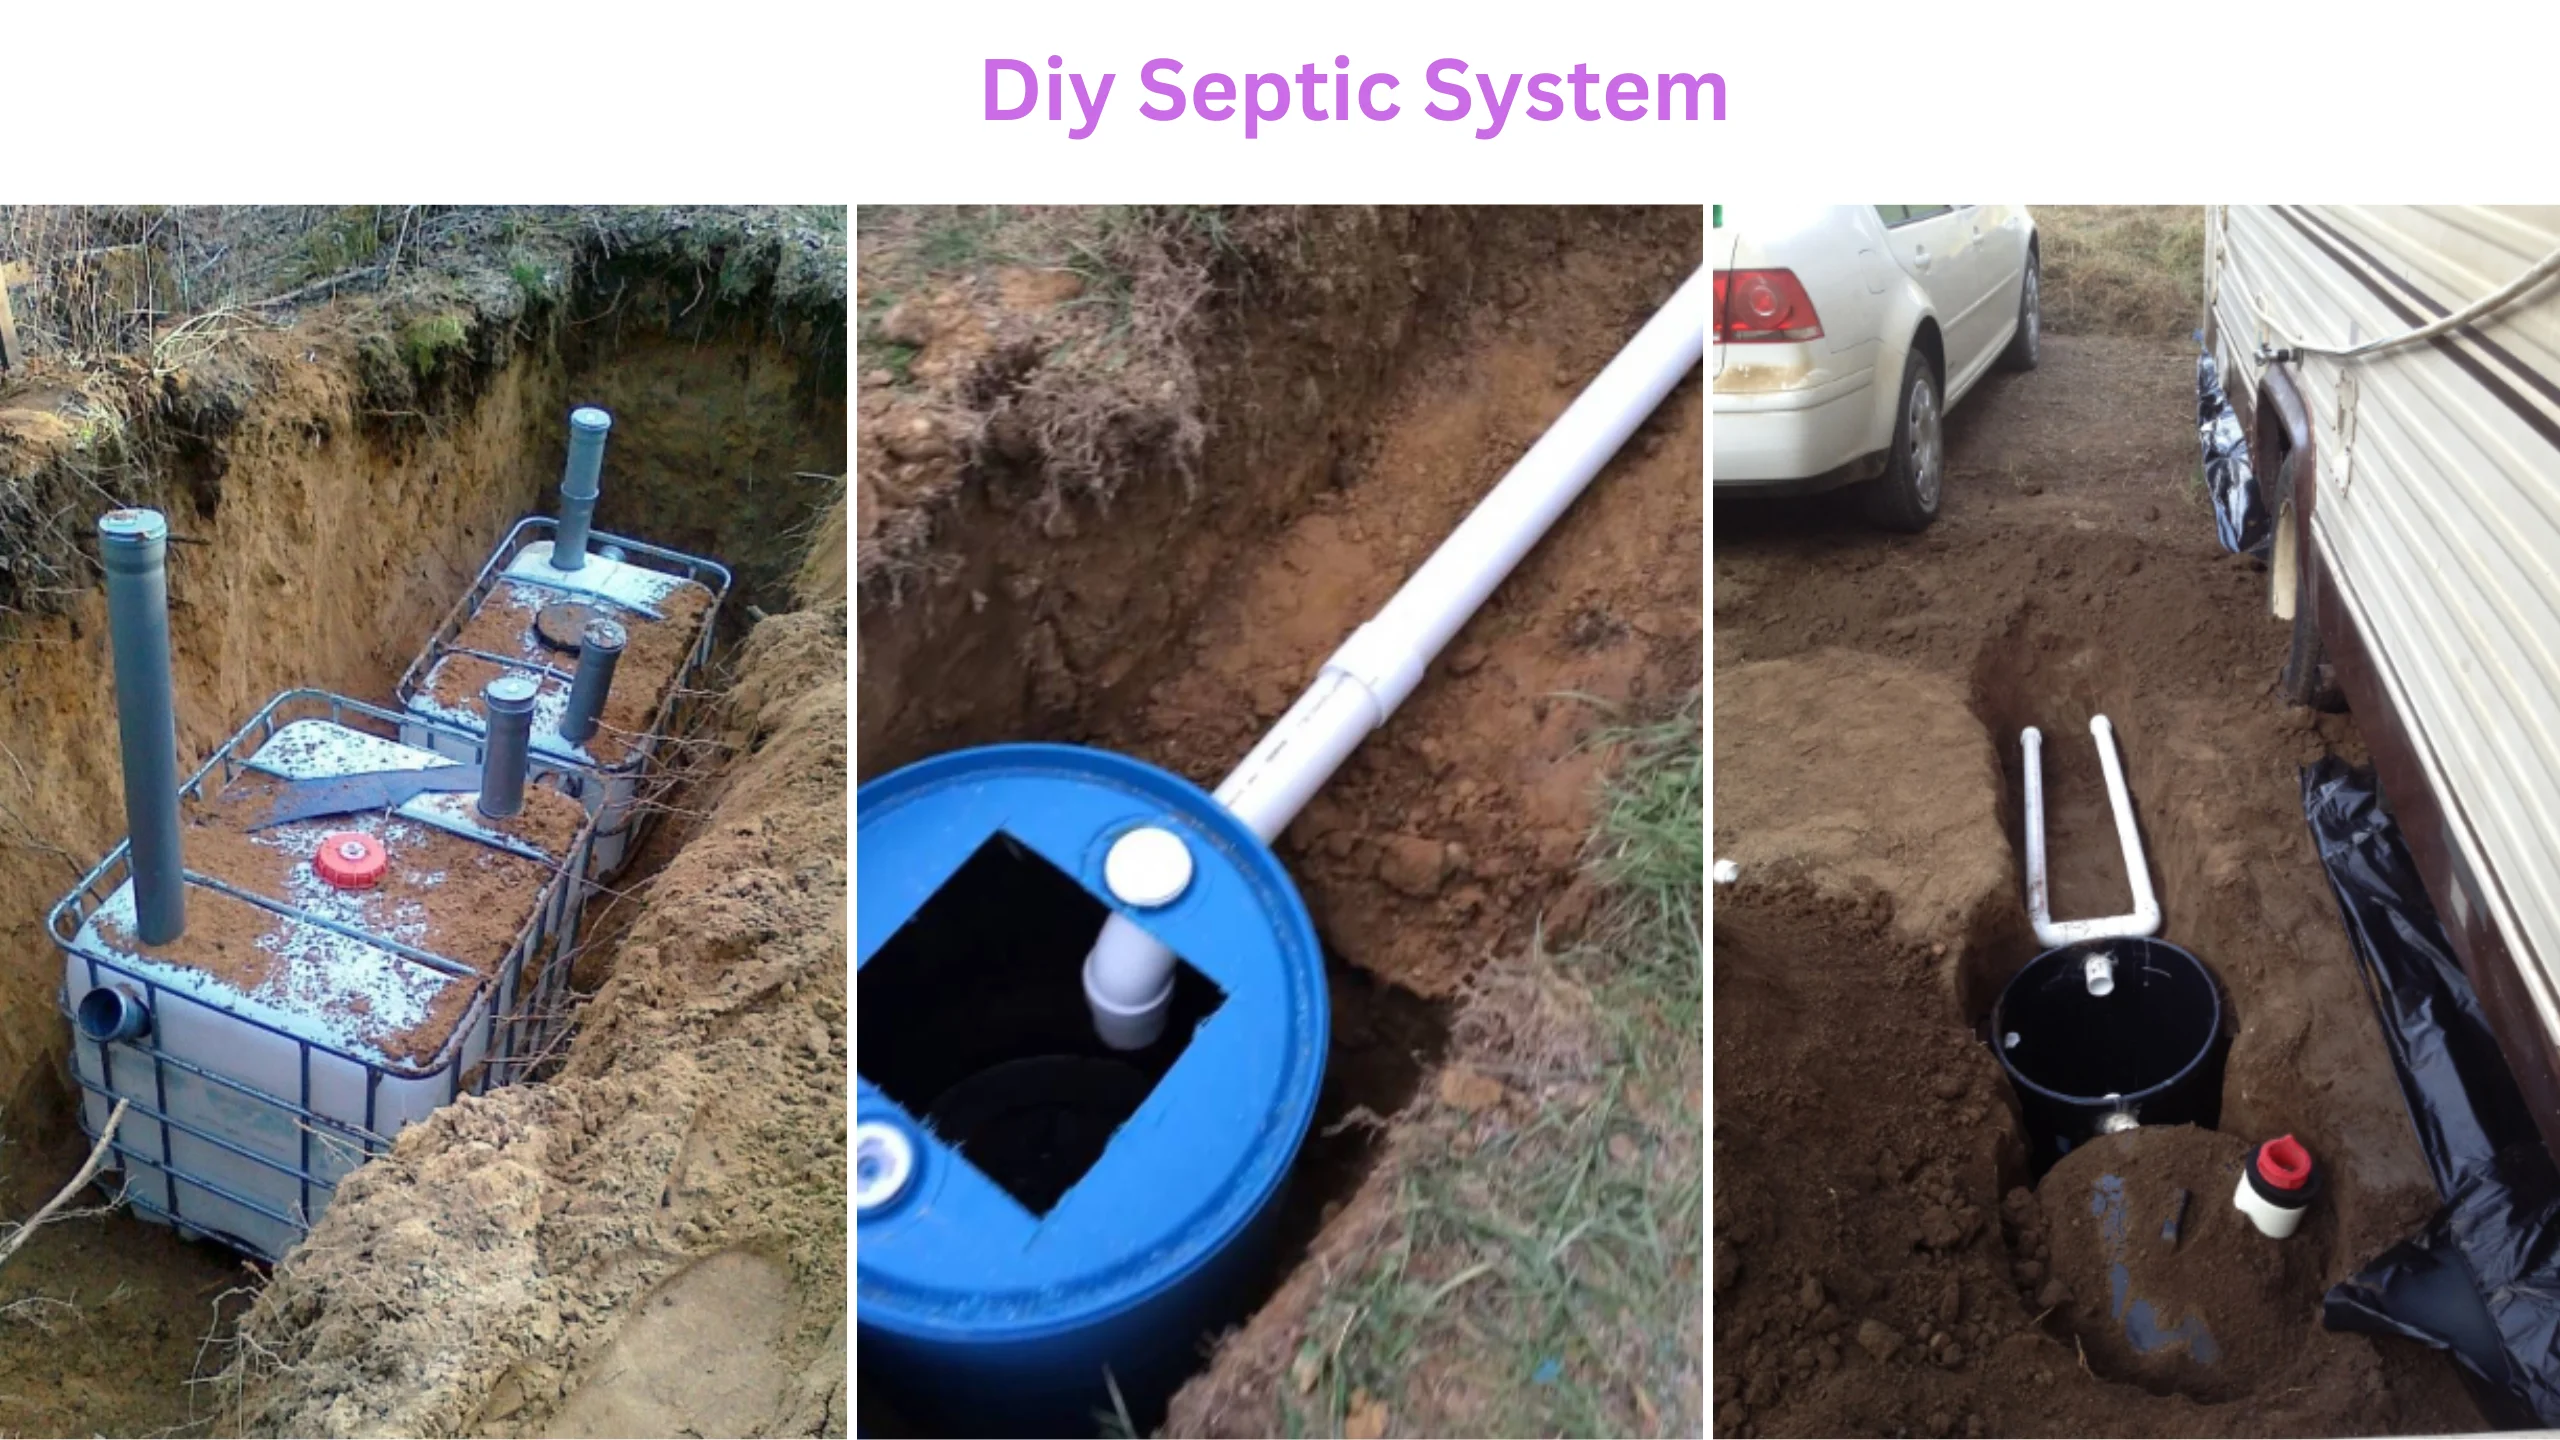 Diy septic system